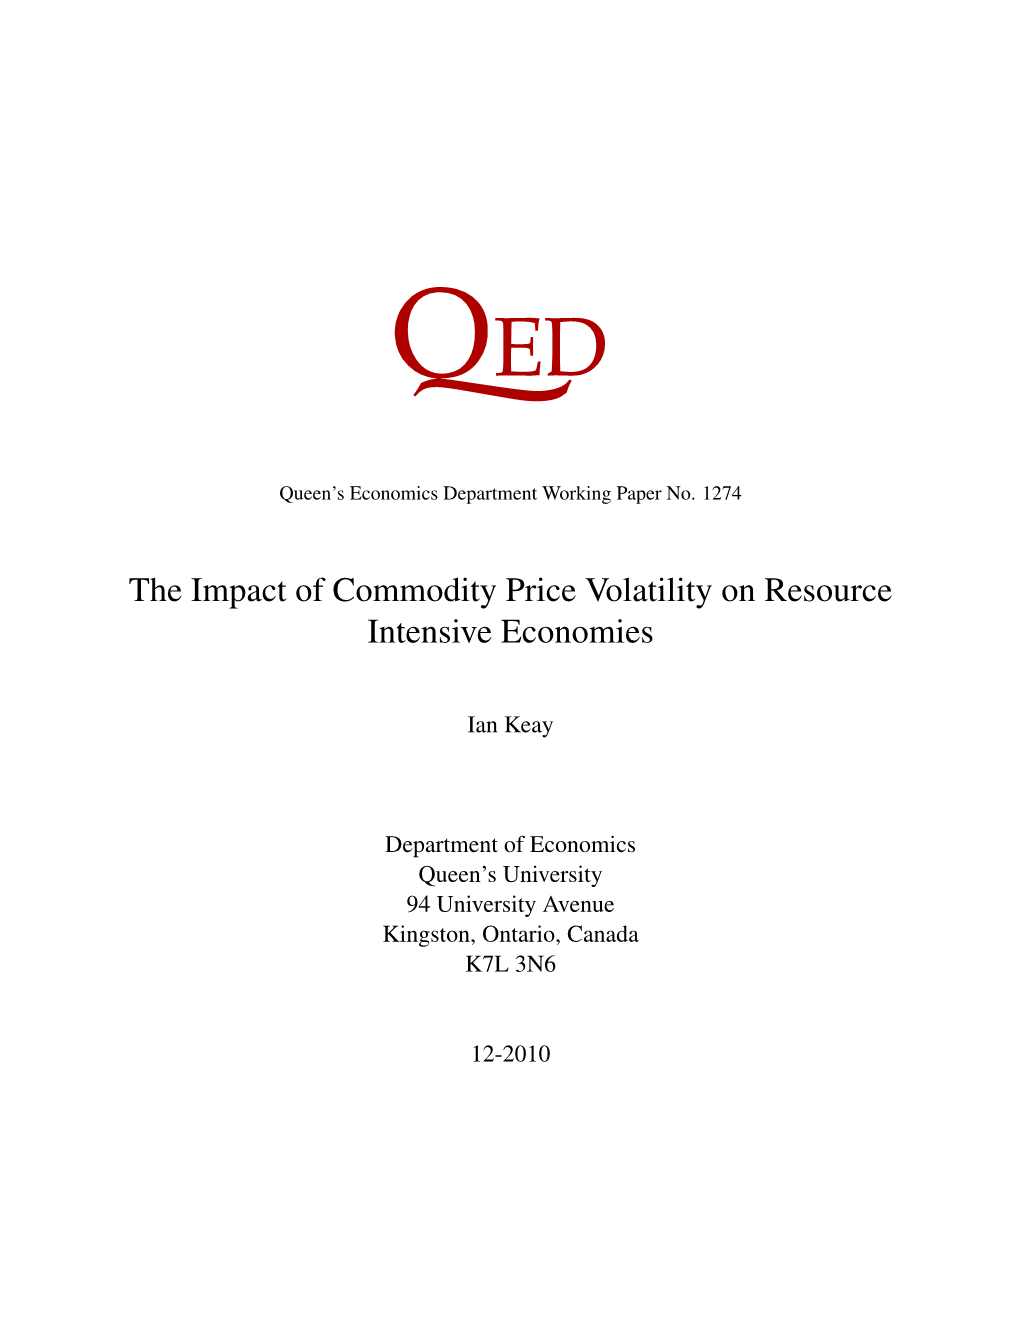 The Impact of Commodity Price Volatility on Resource Intensive Economies